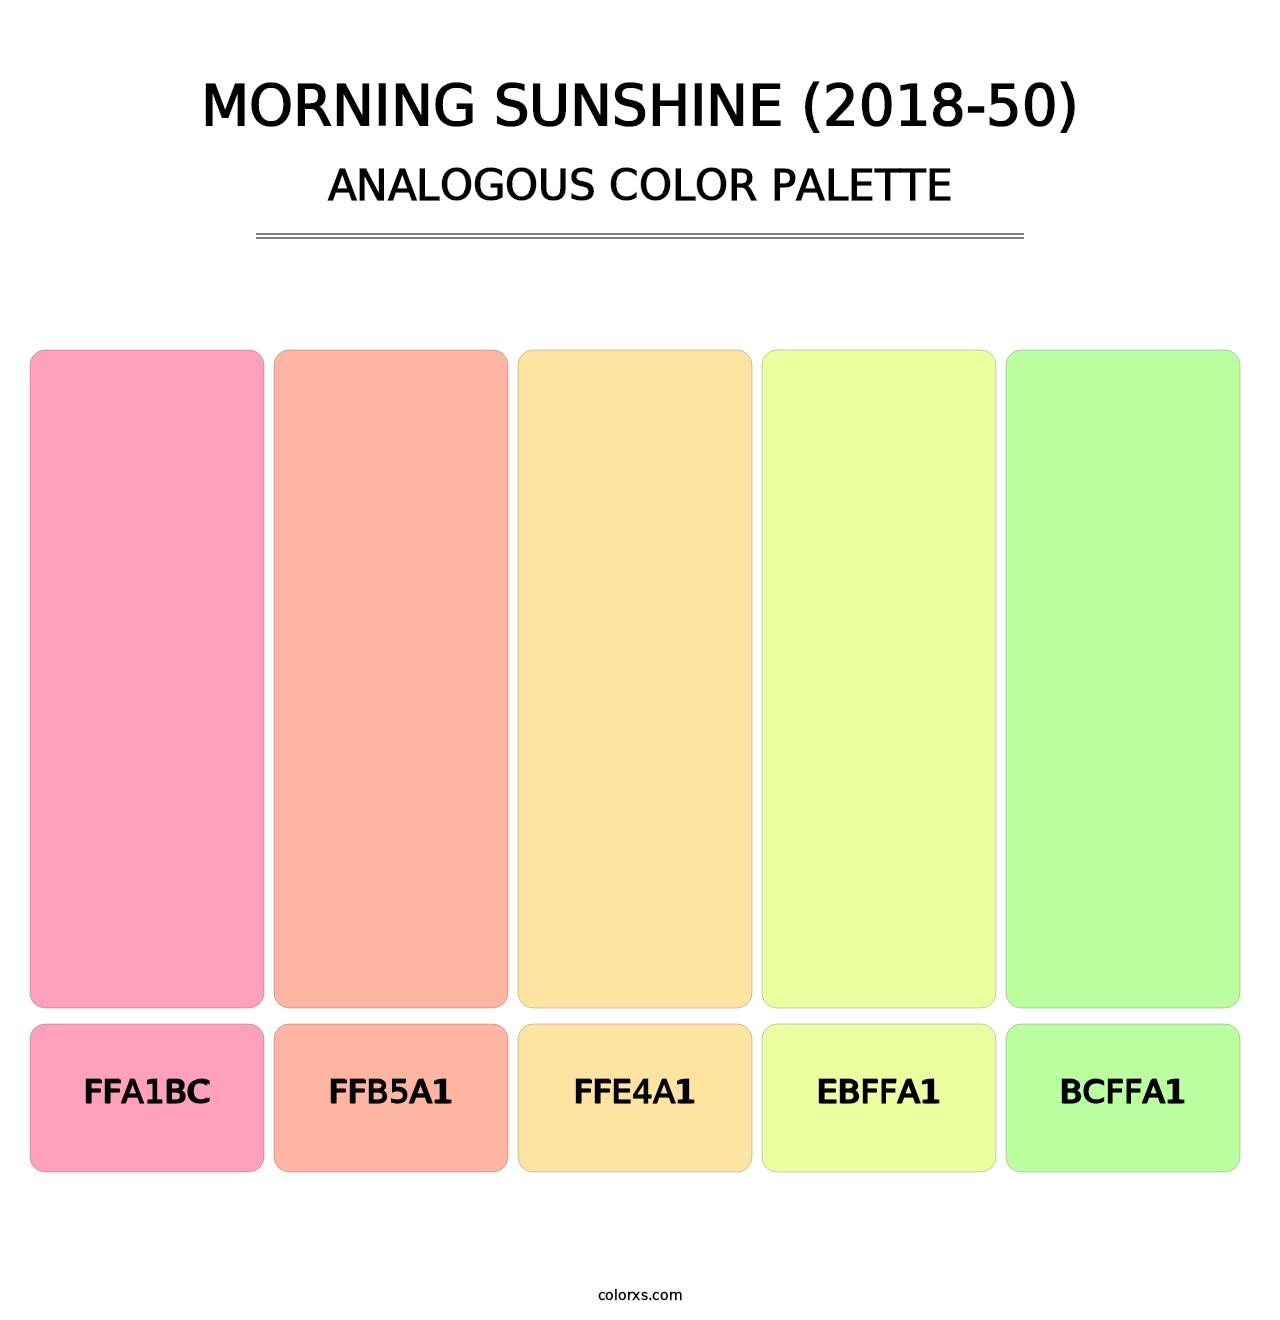 Morning Sunshine (2018-50) - Analogous Color Palette